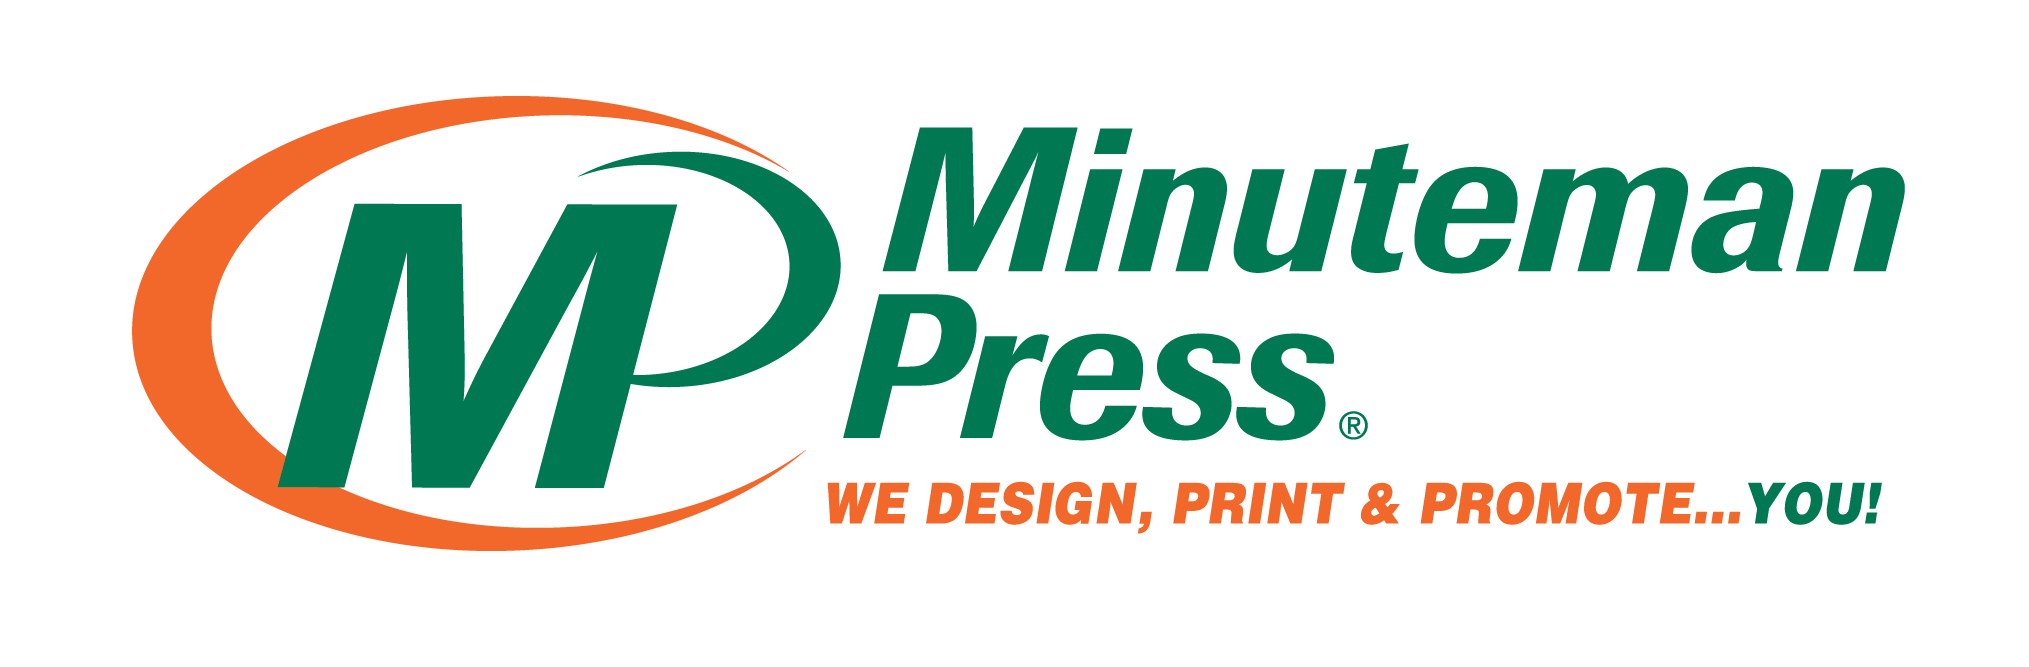 Minuteman Press Glasgow South